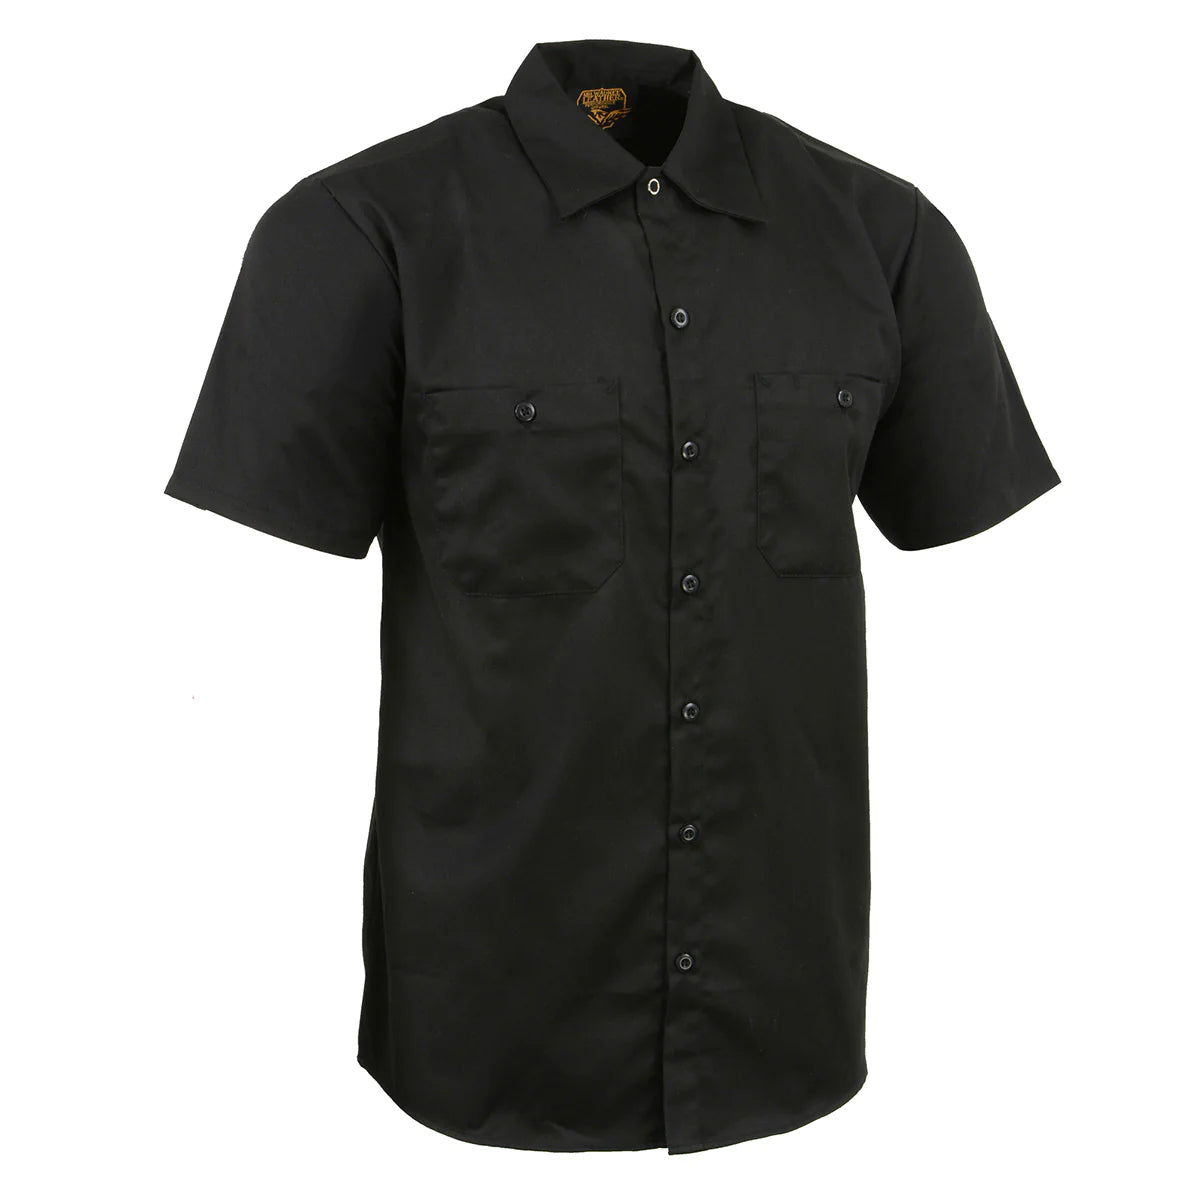 Black Button Up Heavy-Duty Work Shirt for Men's, Classic Mechanic Work Shirt w/ Pockets